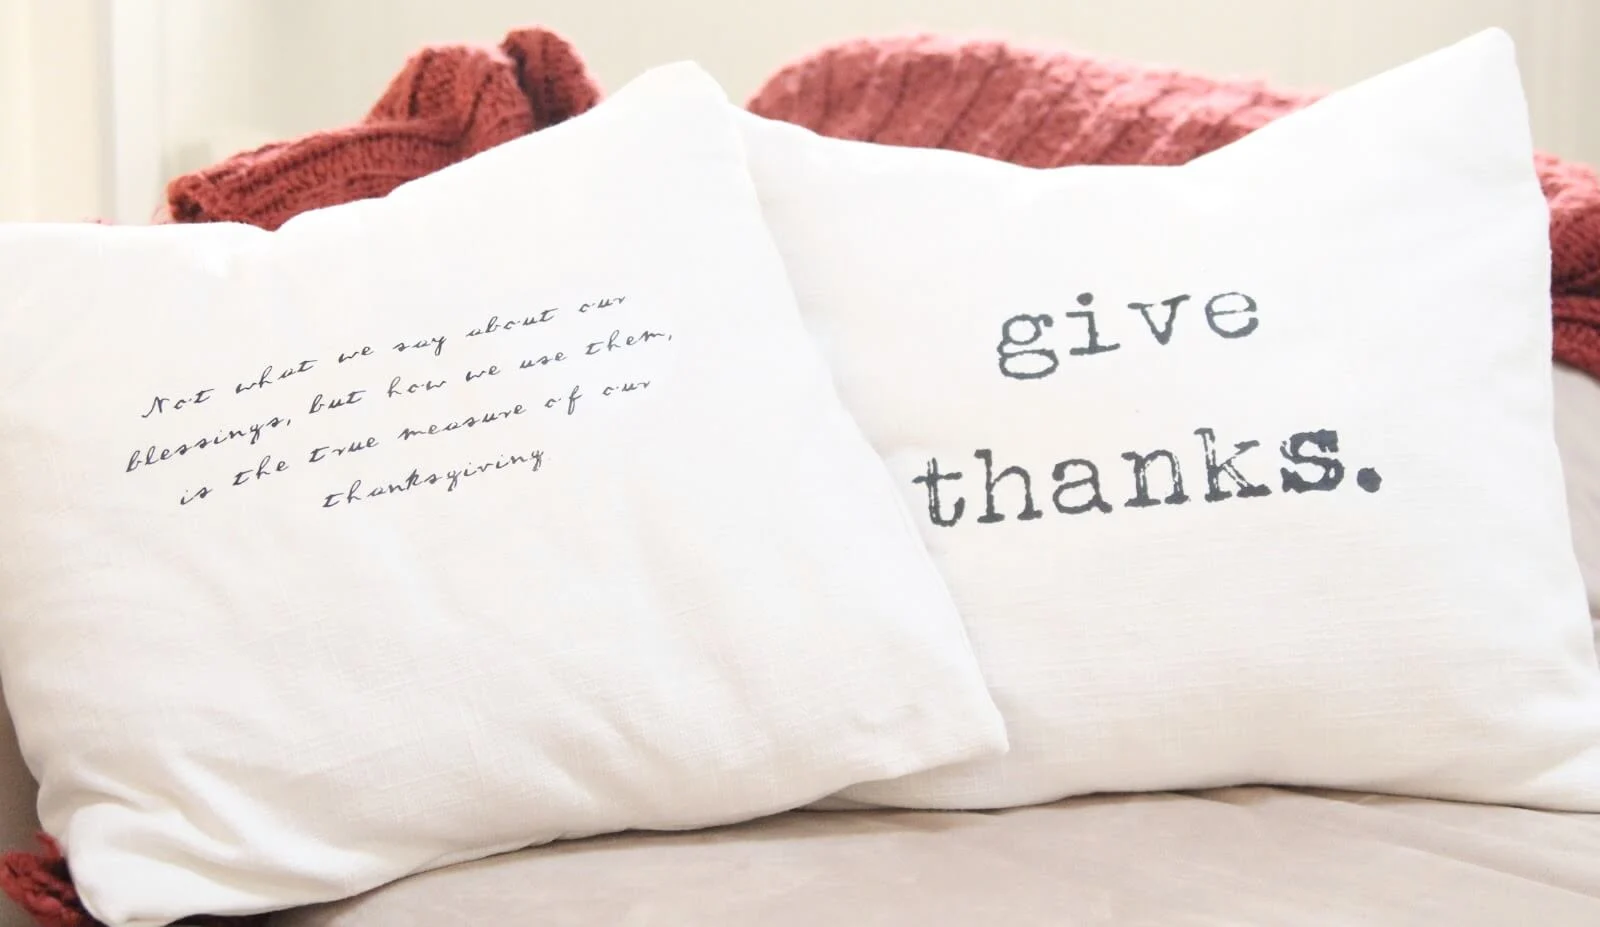 diy thanksgiving pillows